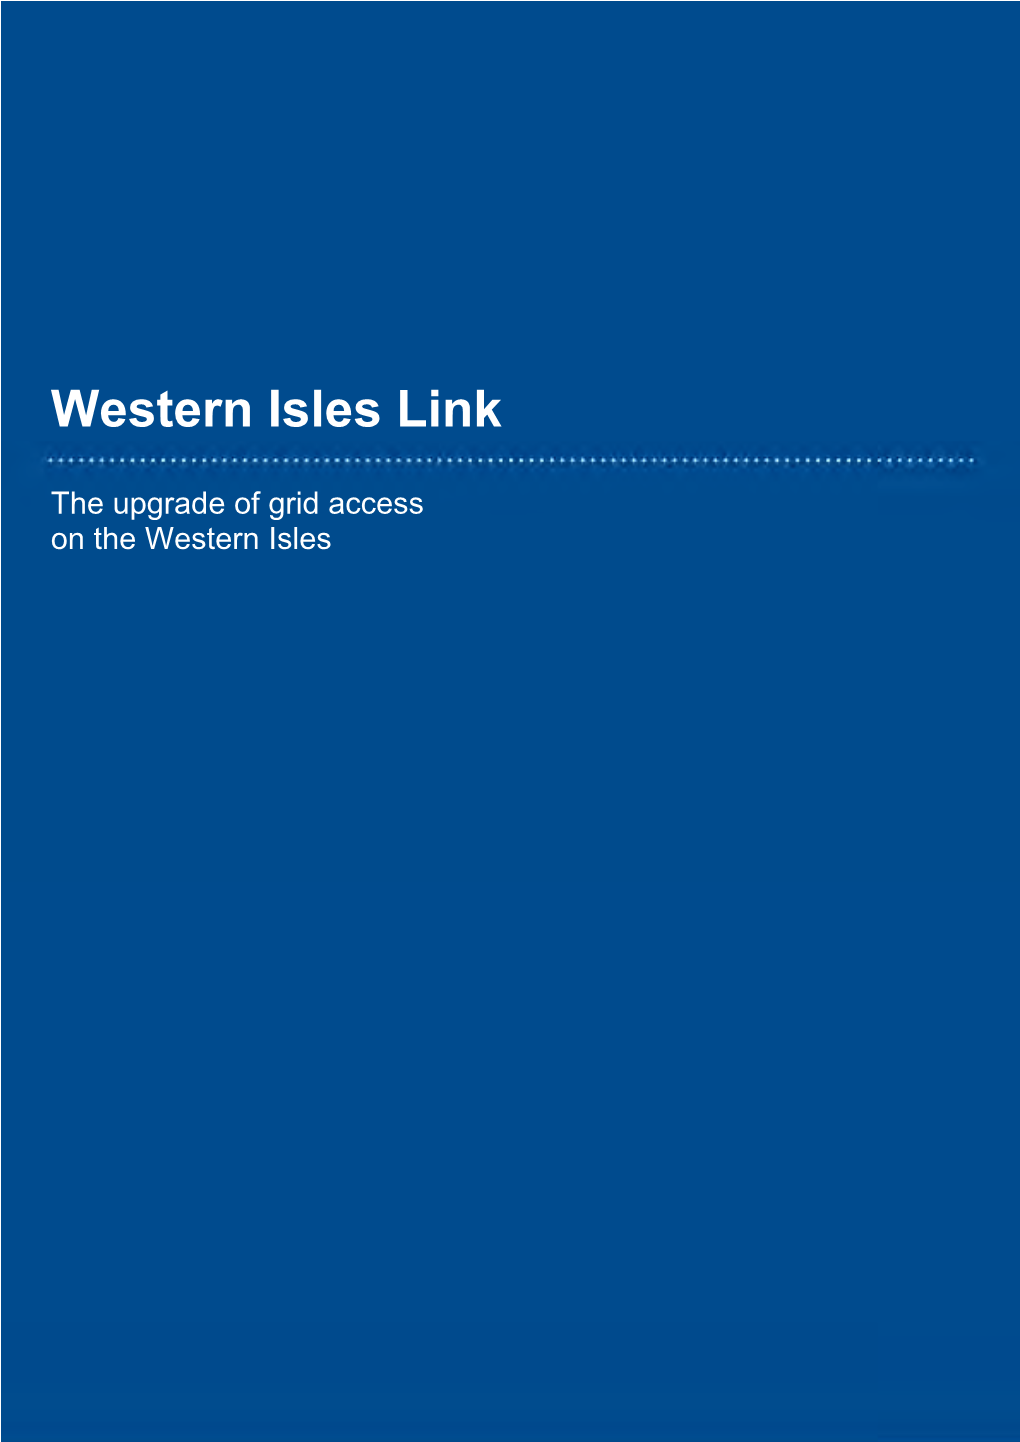 Western Isles Needs Case Study